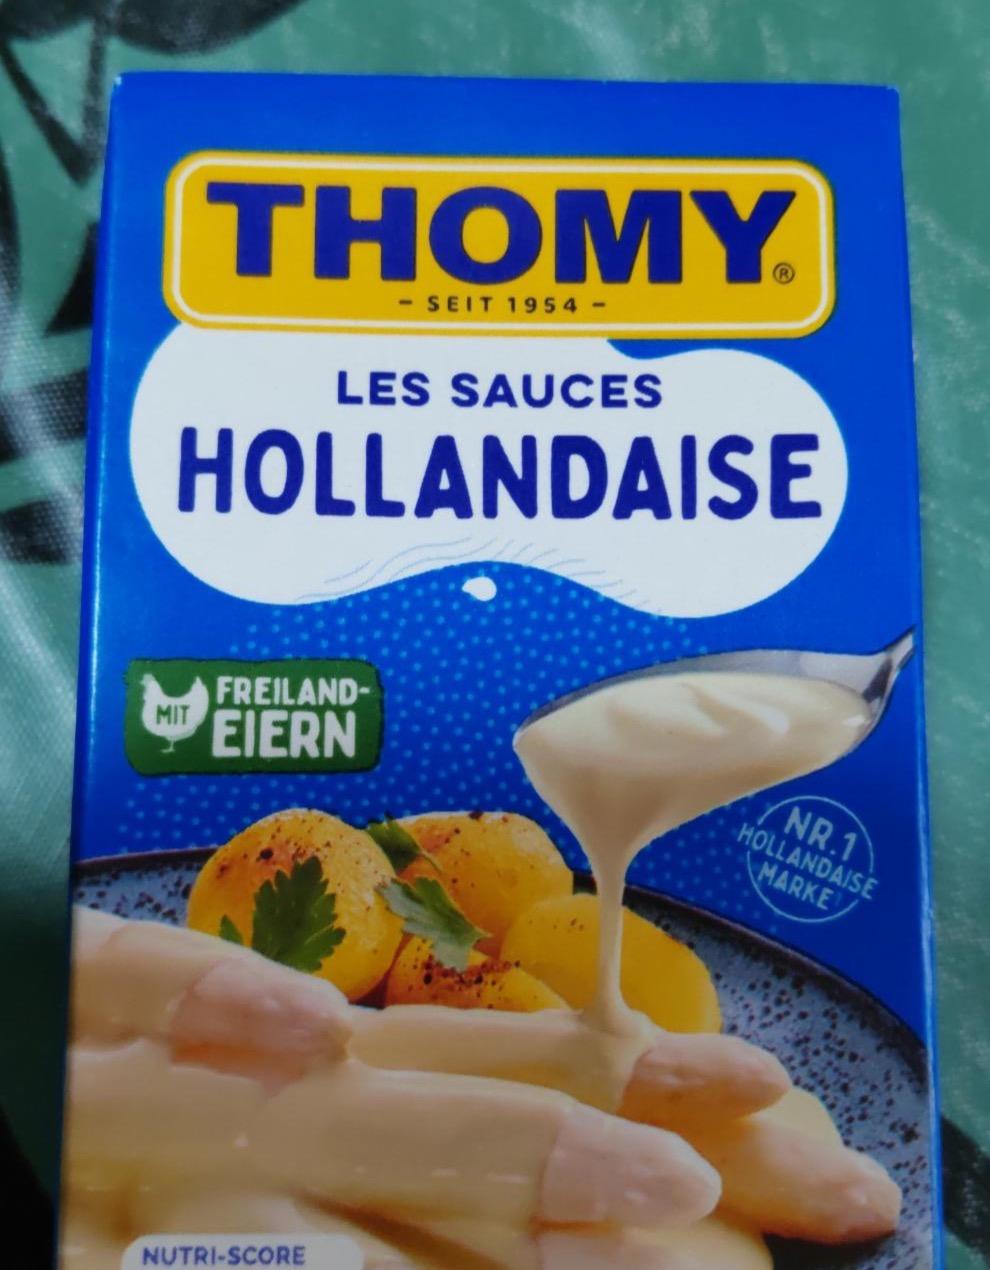 Képek - Les sauces hollandaise Thomy